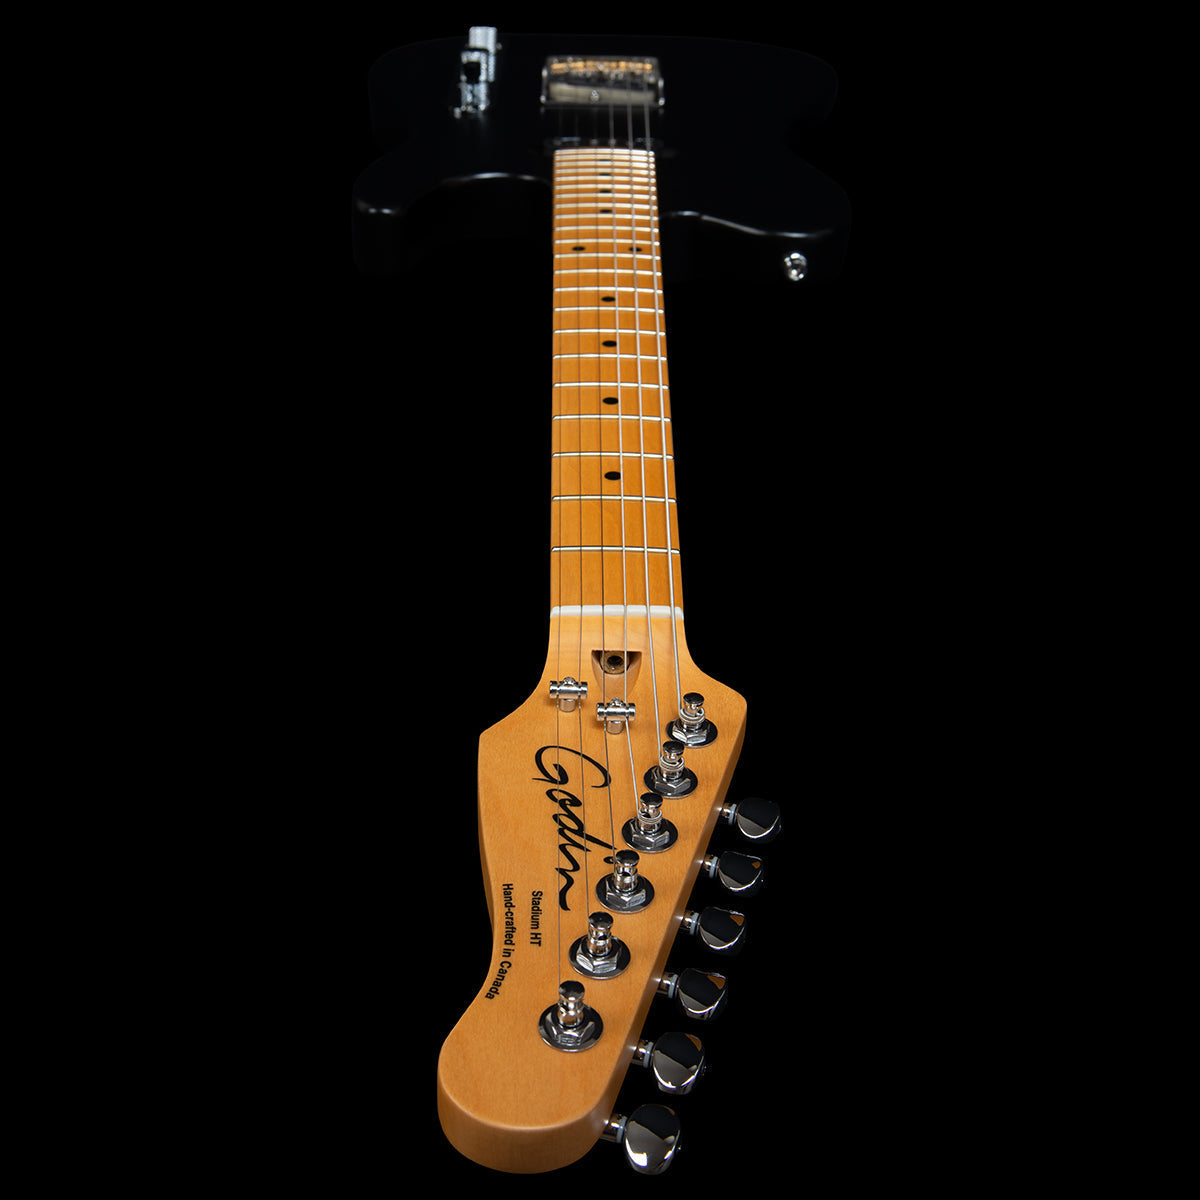 Godin Stadium HT Electric Guitar ~ Matte Black MN, Electric Guitar for sale at Richards Guitars.